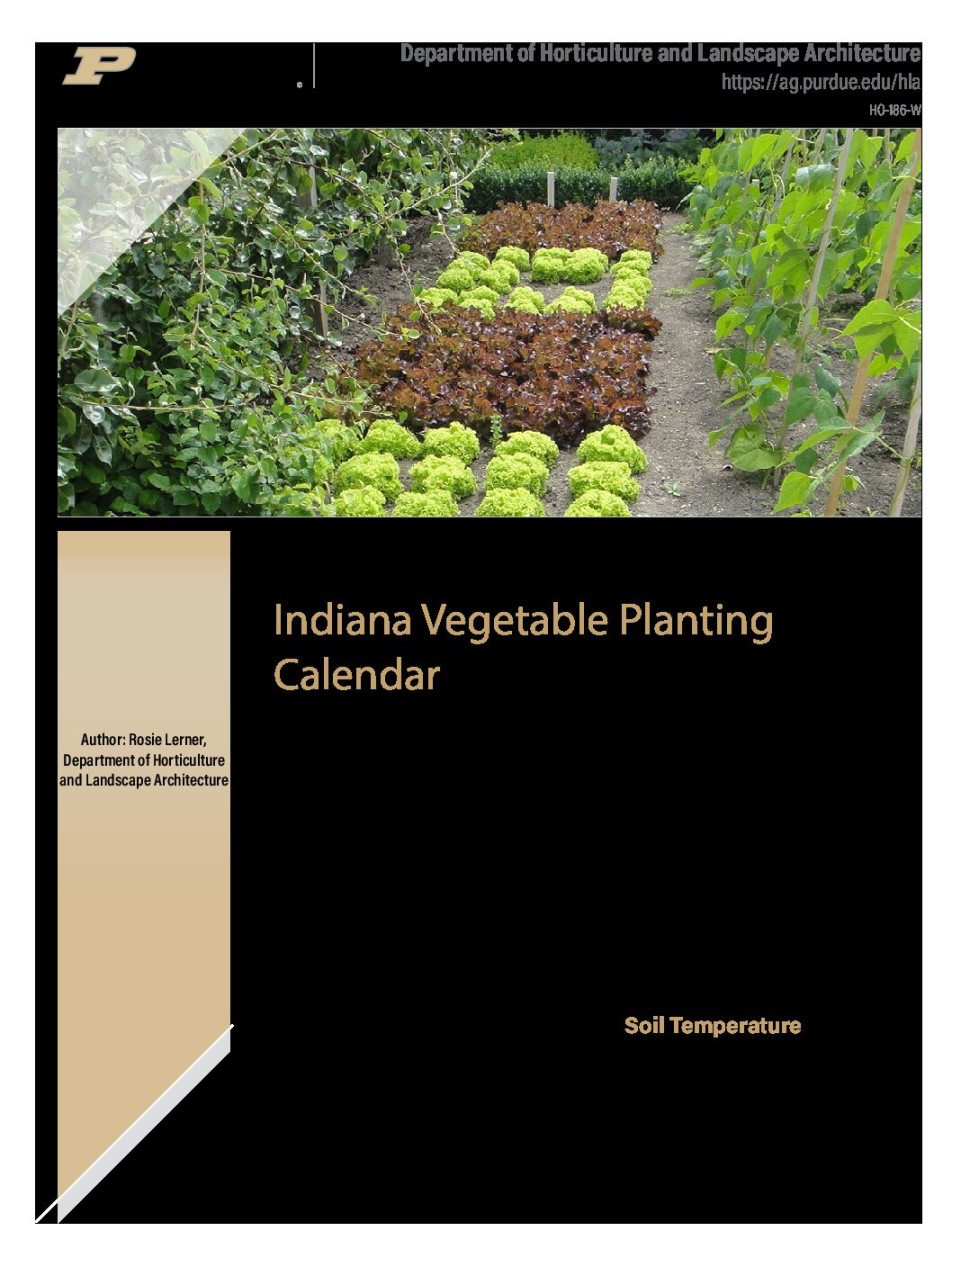 Indiana Vegetable Planting Calendar - Indiana Yard and Garden